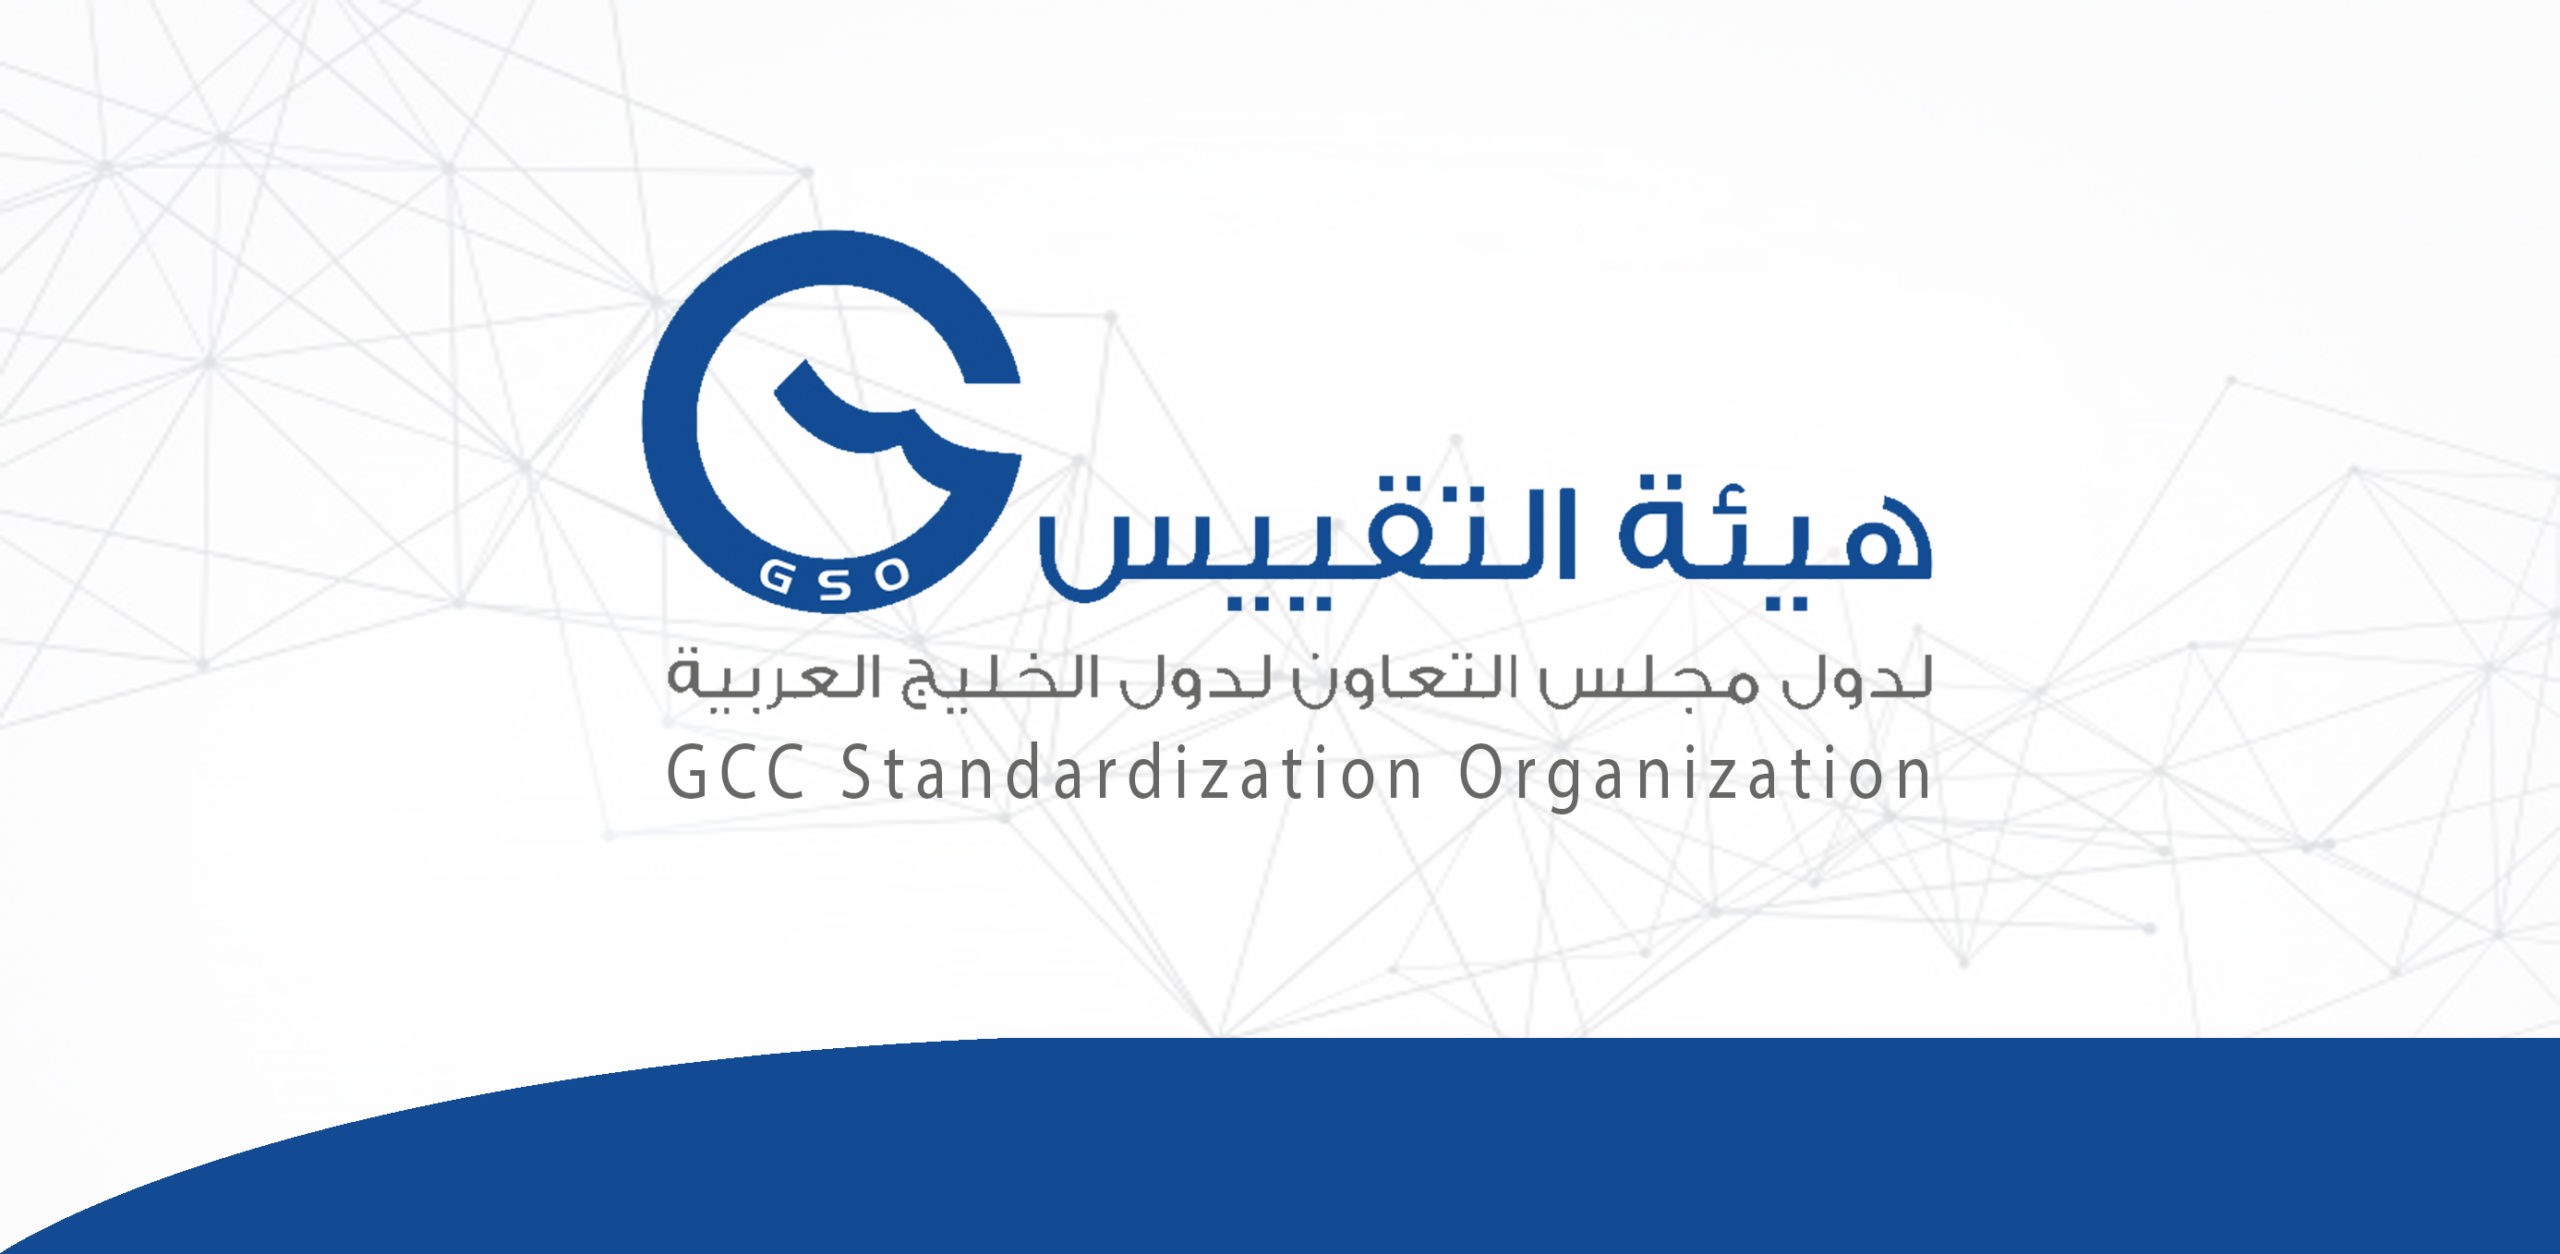 GCC Standardization Organization GSO